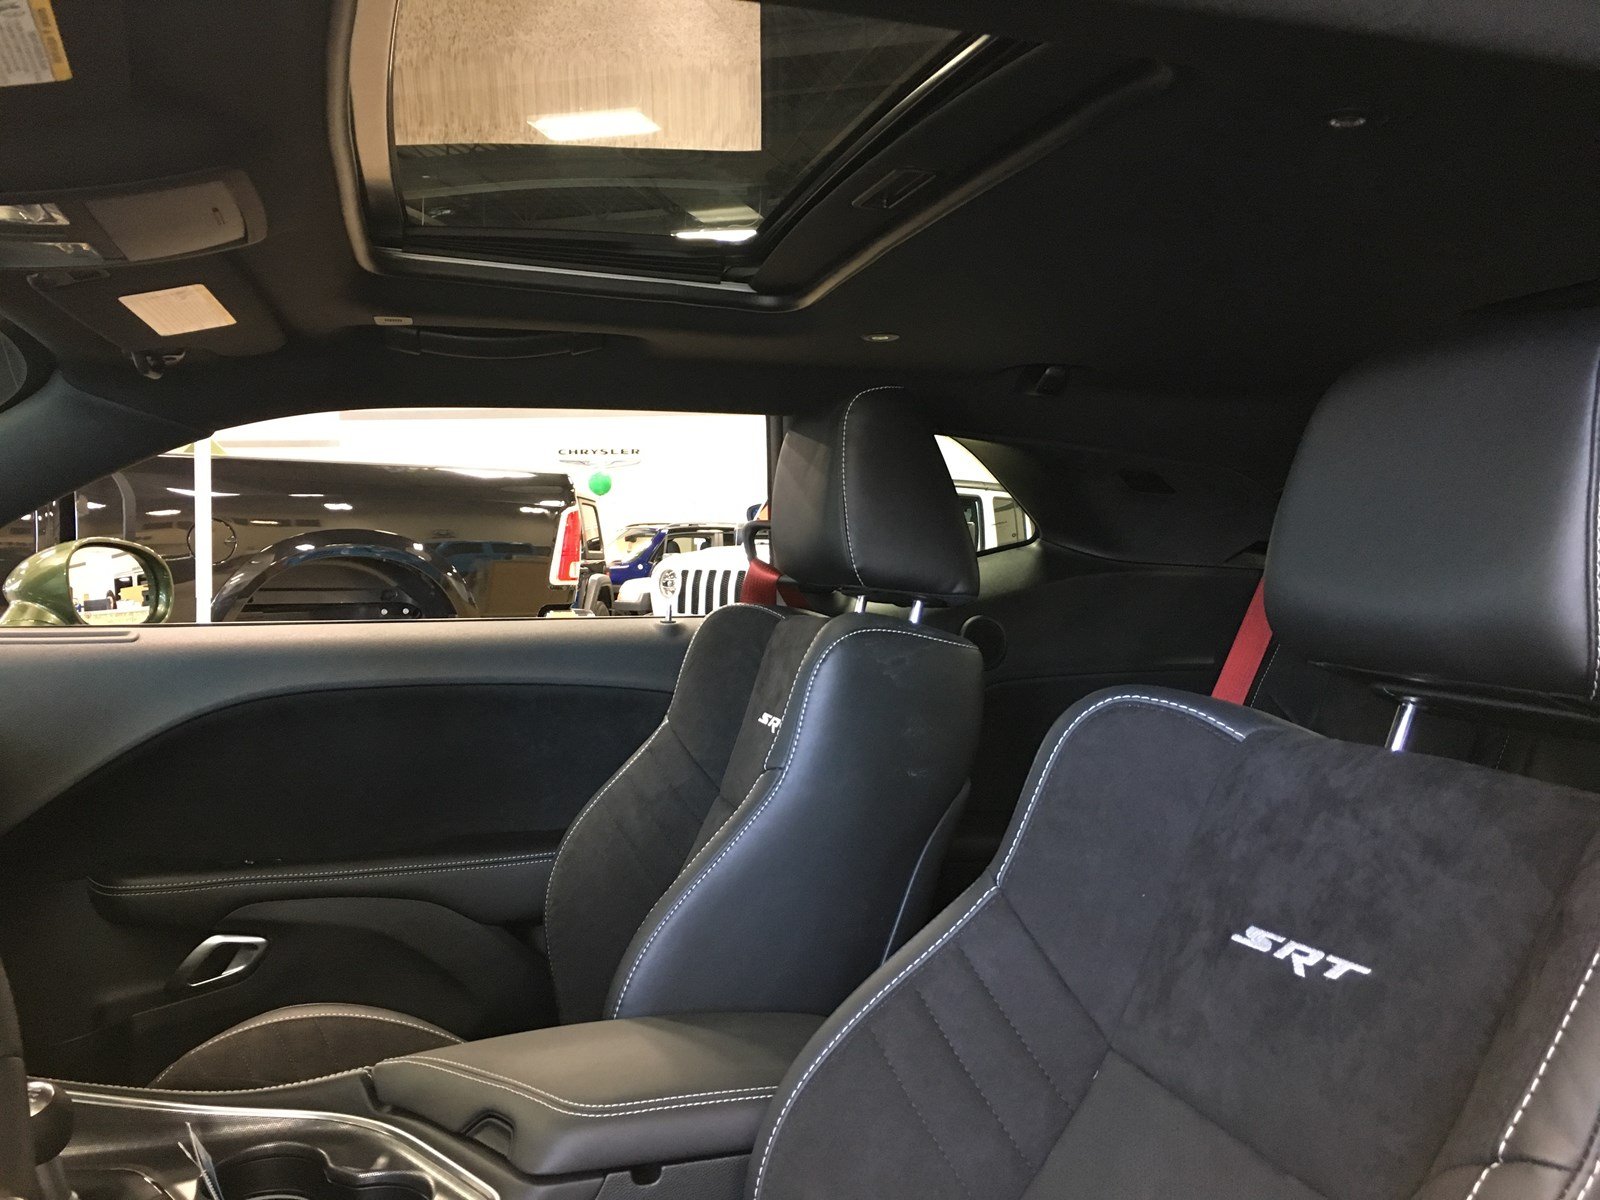 New 2018 Dodge Challenger SRT 392 6.4L Hemi Ventilated Seats Sunroof Navigation 2dr Car in